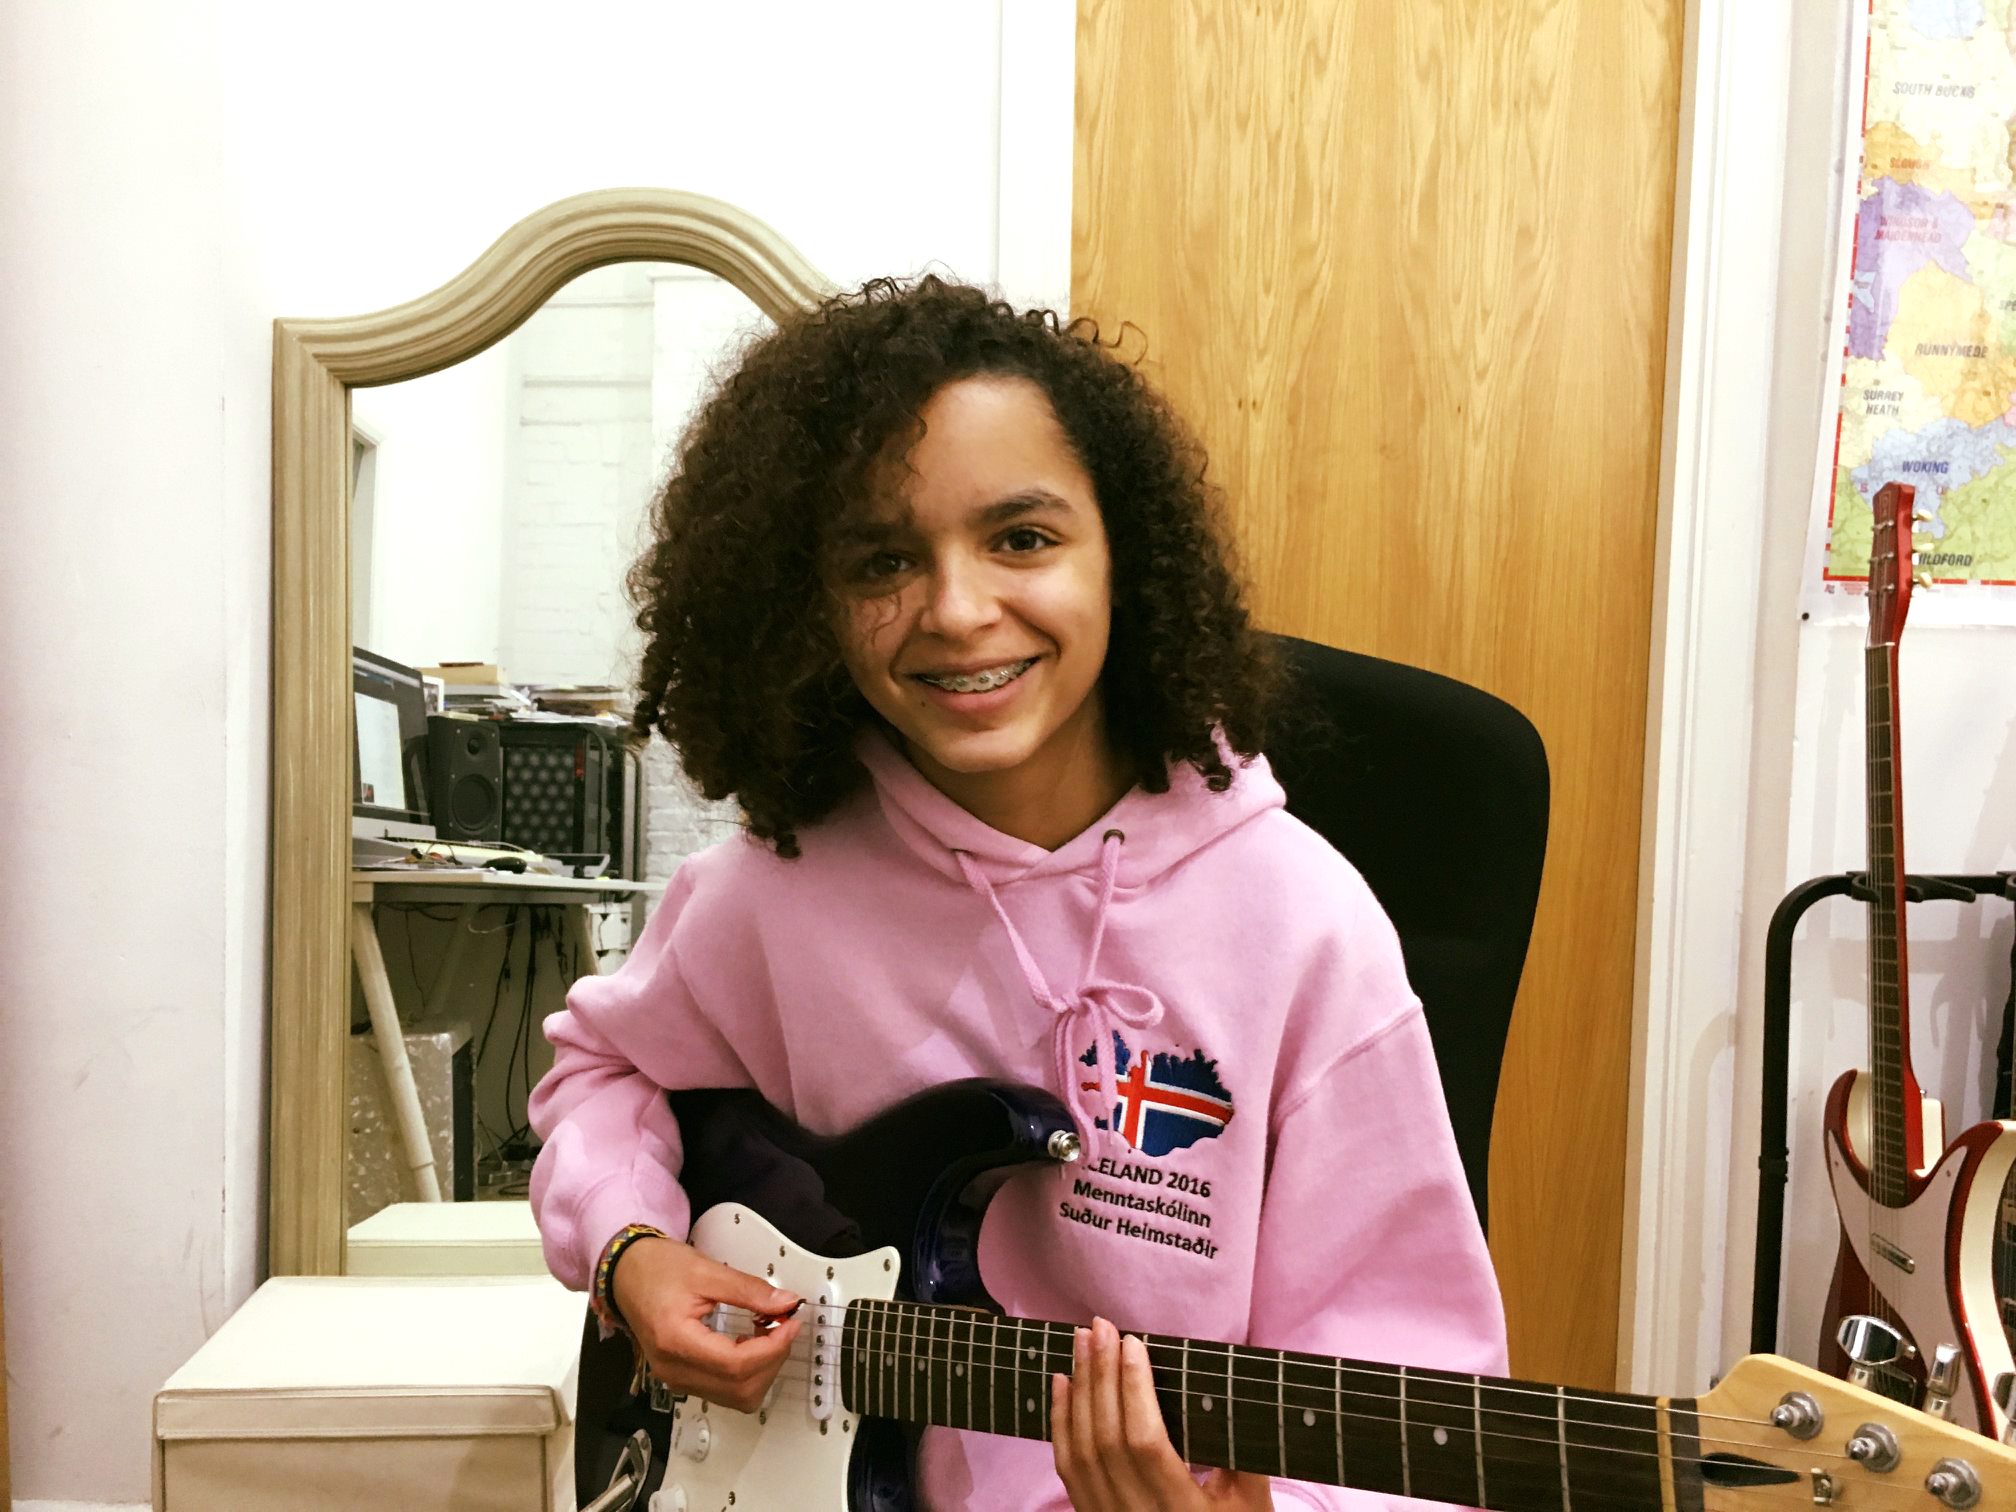 Kids Guitar Lessons